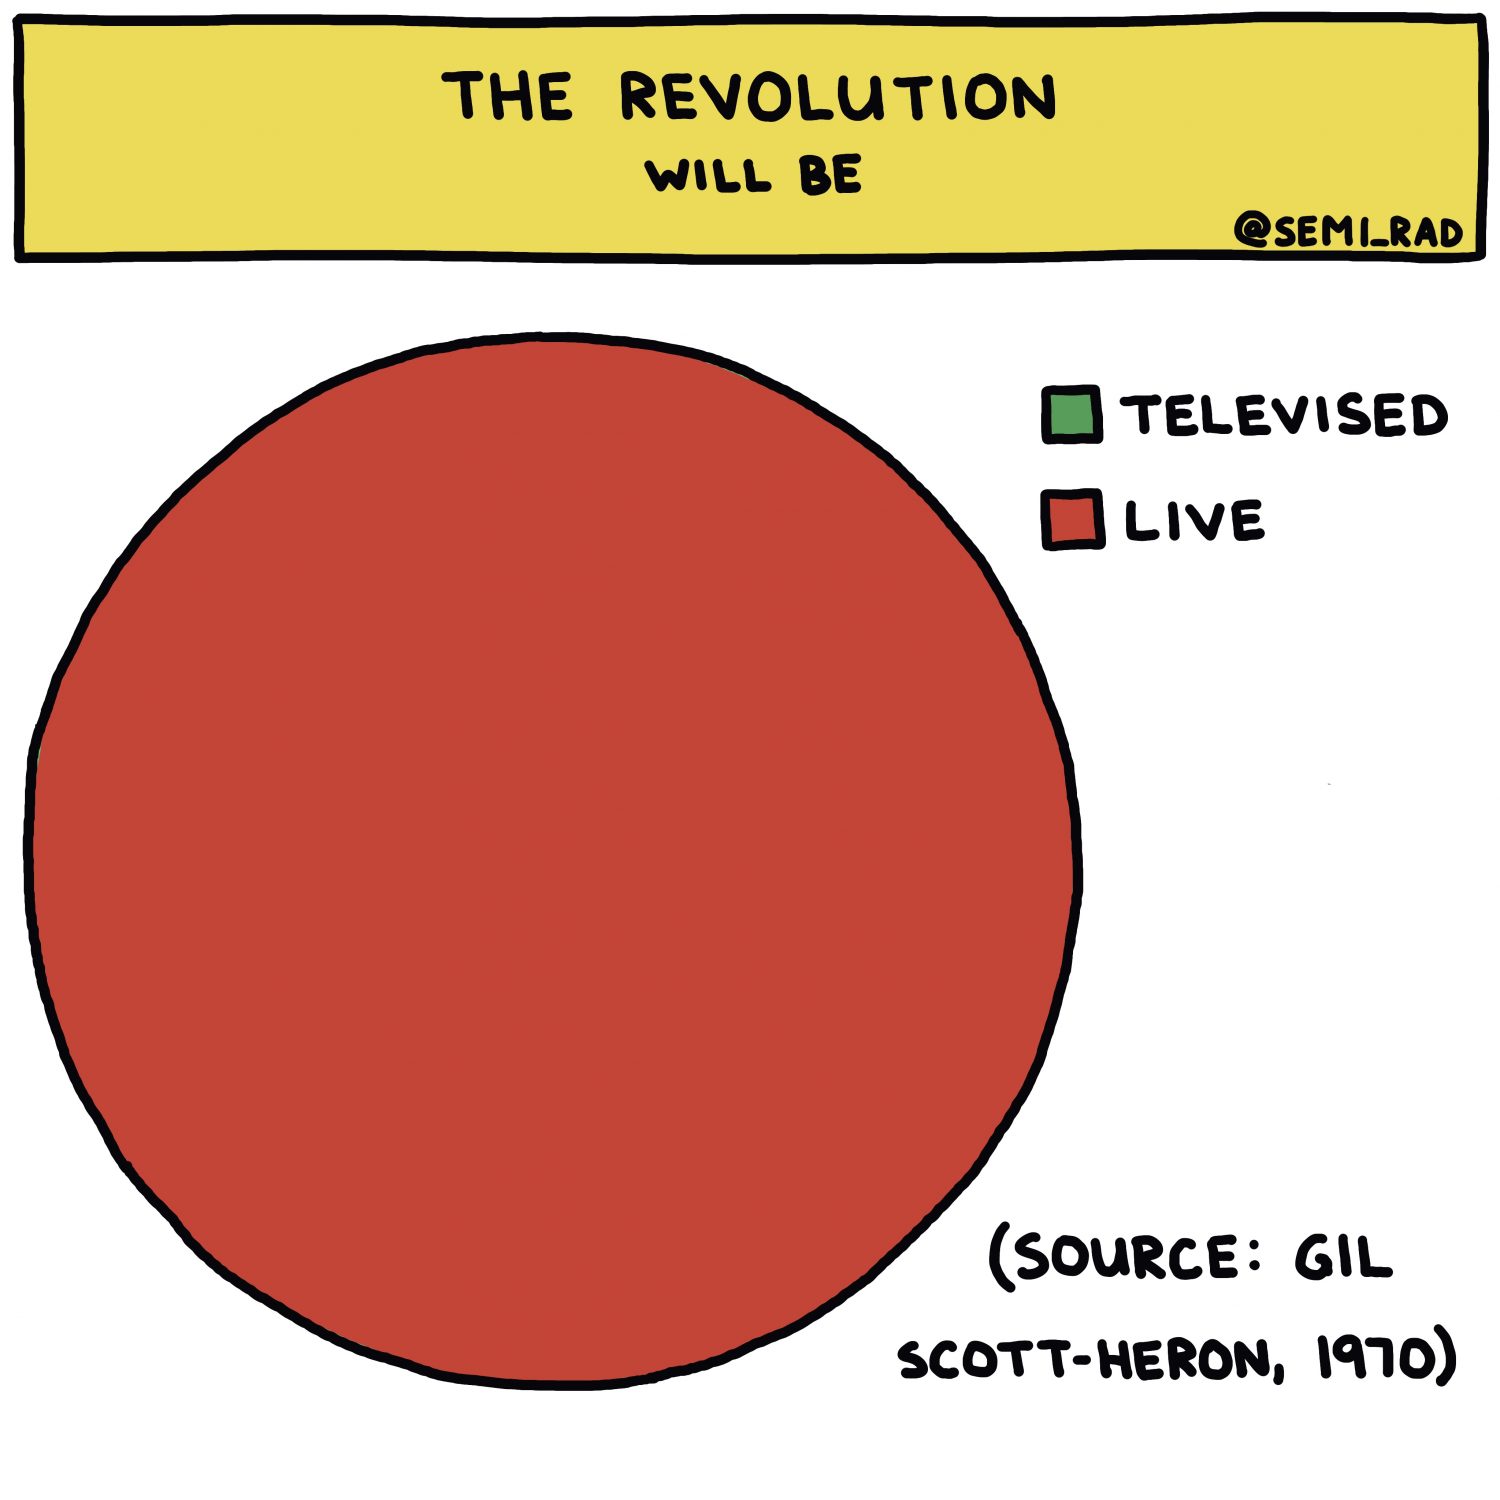 semi-rad chart: The revolution will be